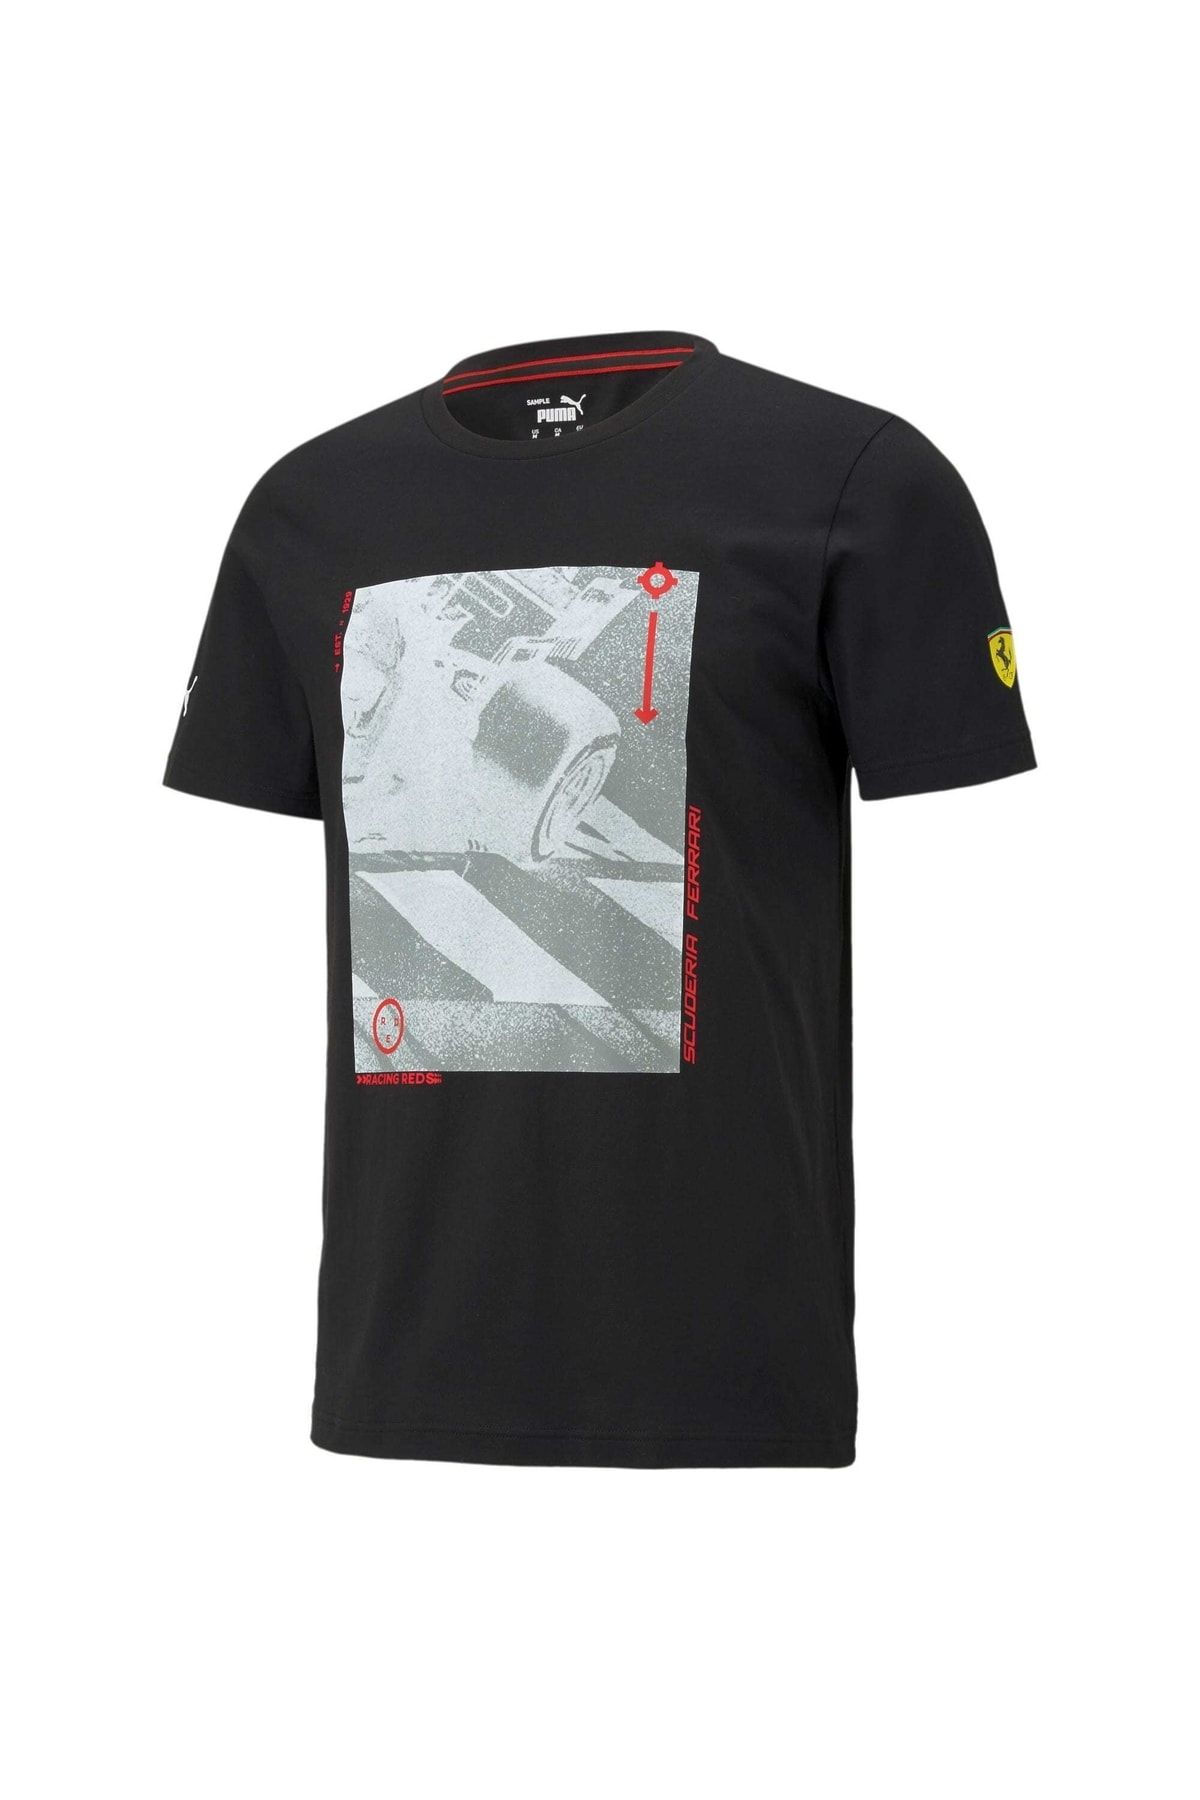 Puma Ferrari Race Graphic Erkek Tişört 59984701